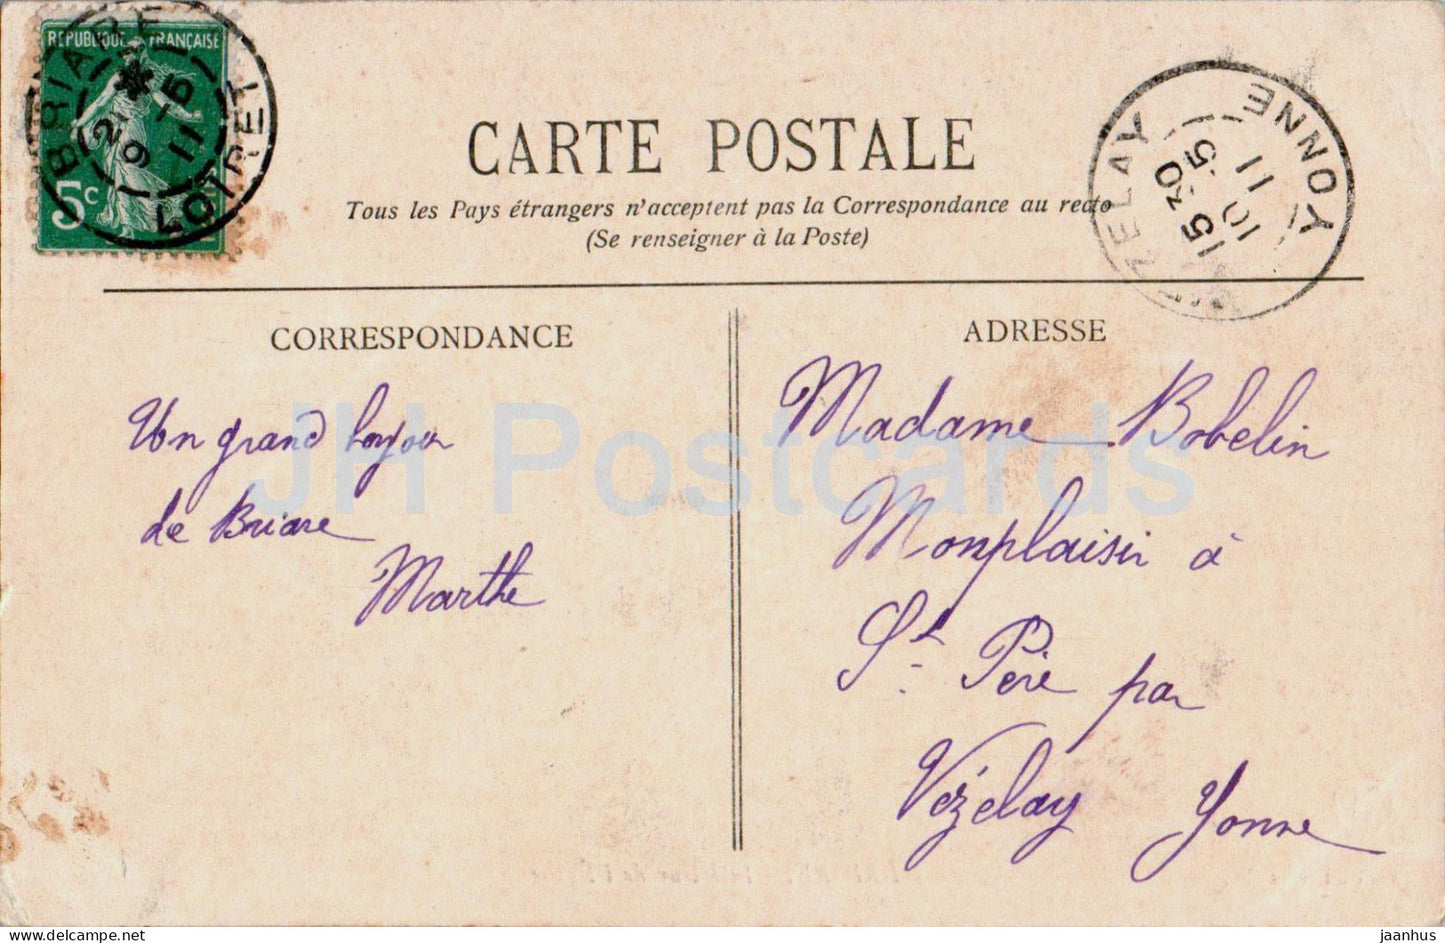 Briare - Interieur de l'Eglise - Kirche - alte Postkarte - 1911 - Frankreich - gebraucht 